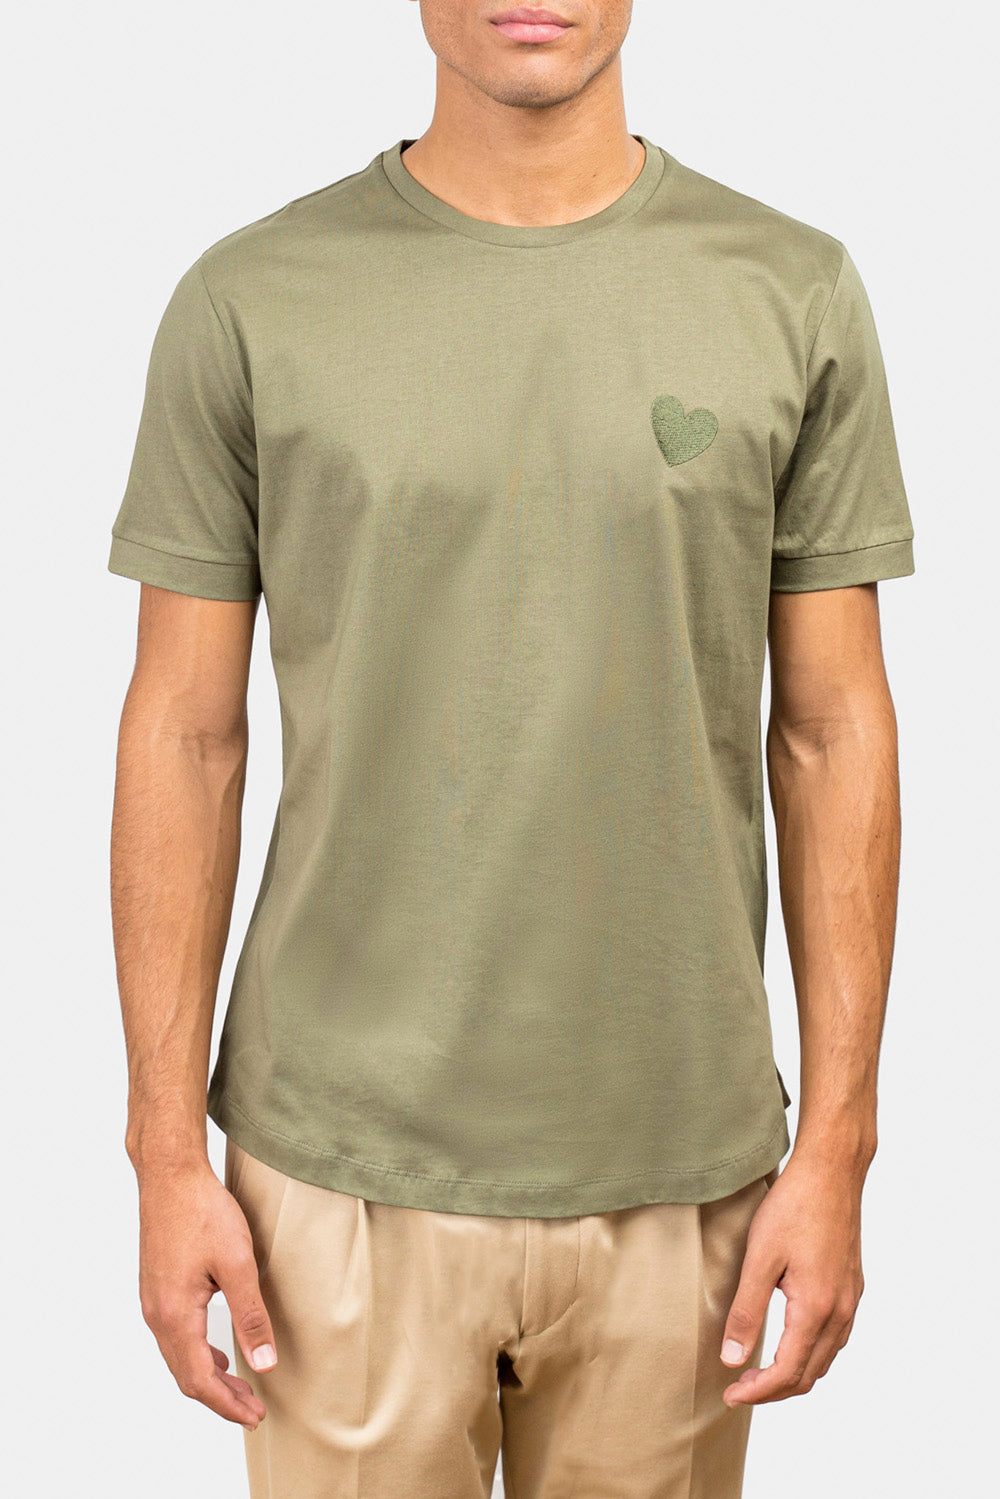 Inimigo Pocket Flower Monogram Comfort Green T-Shirt